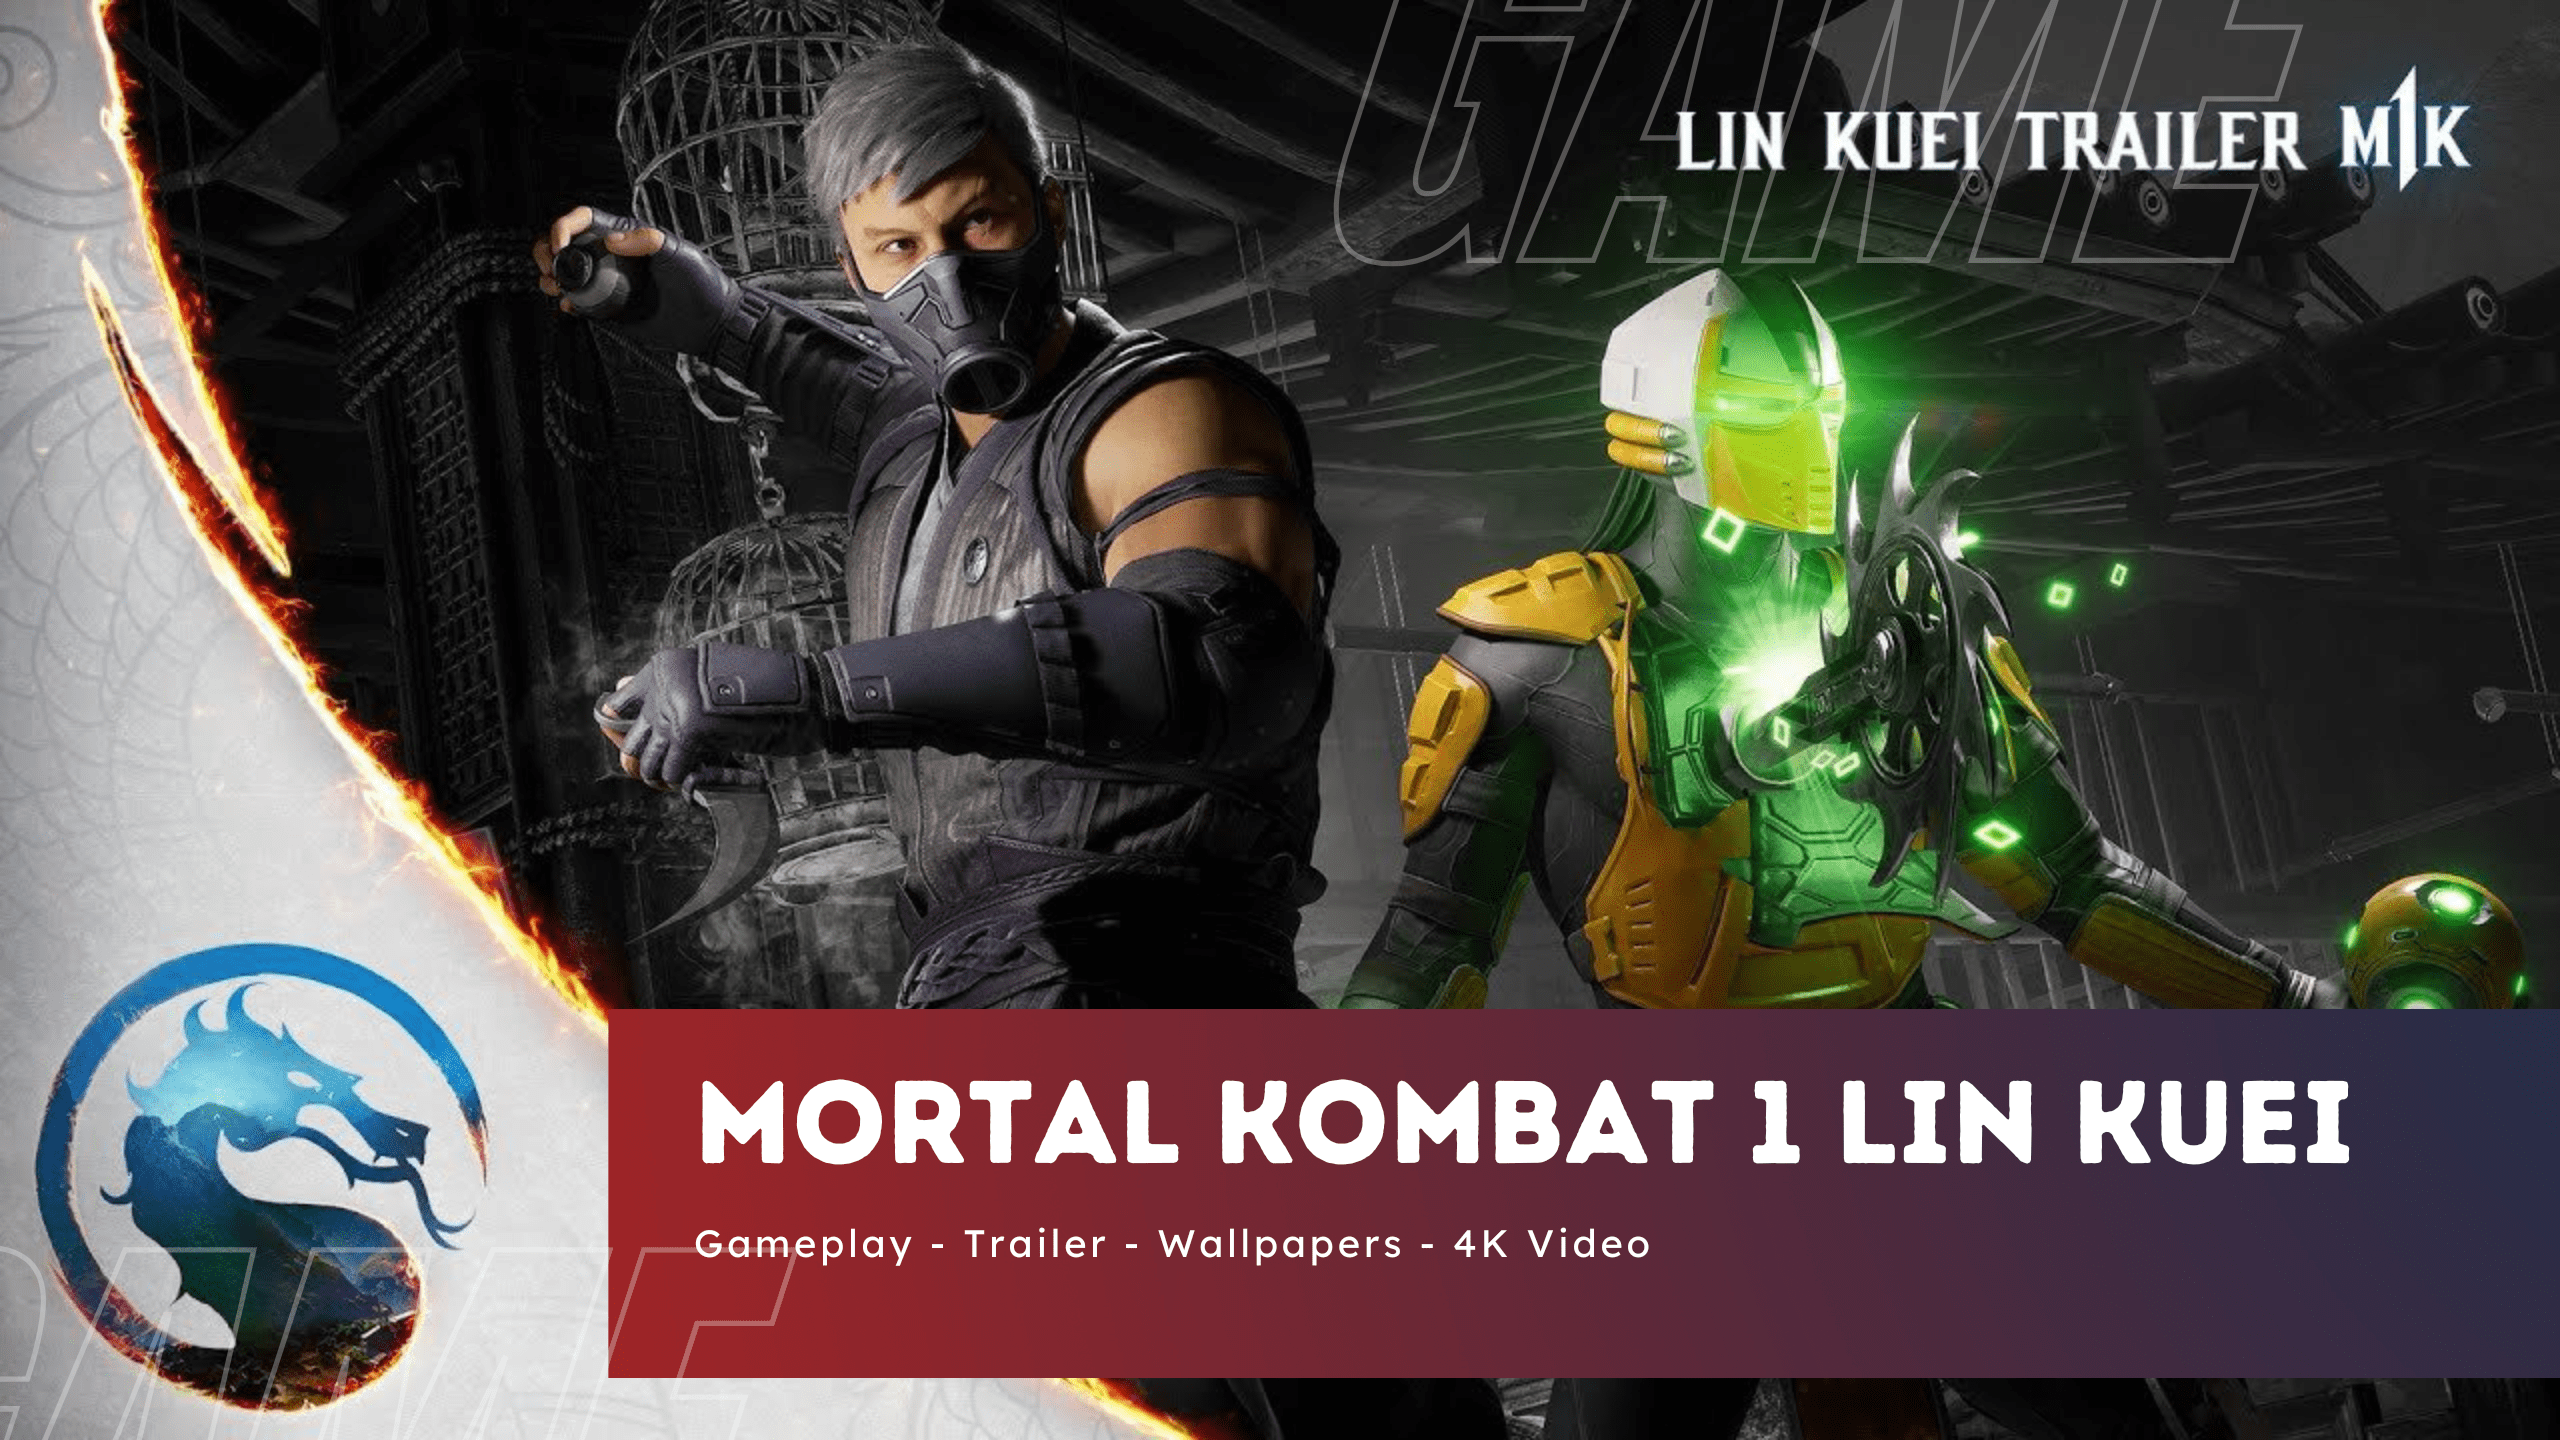 Mortal Kombat 1 Lin Kuei game play trailer